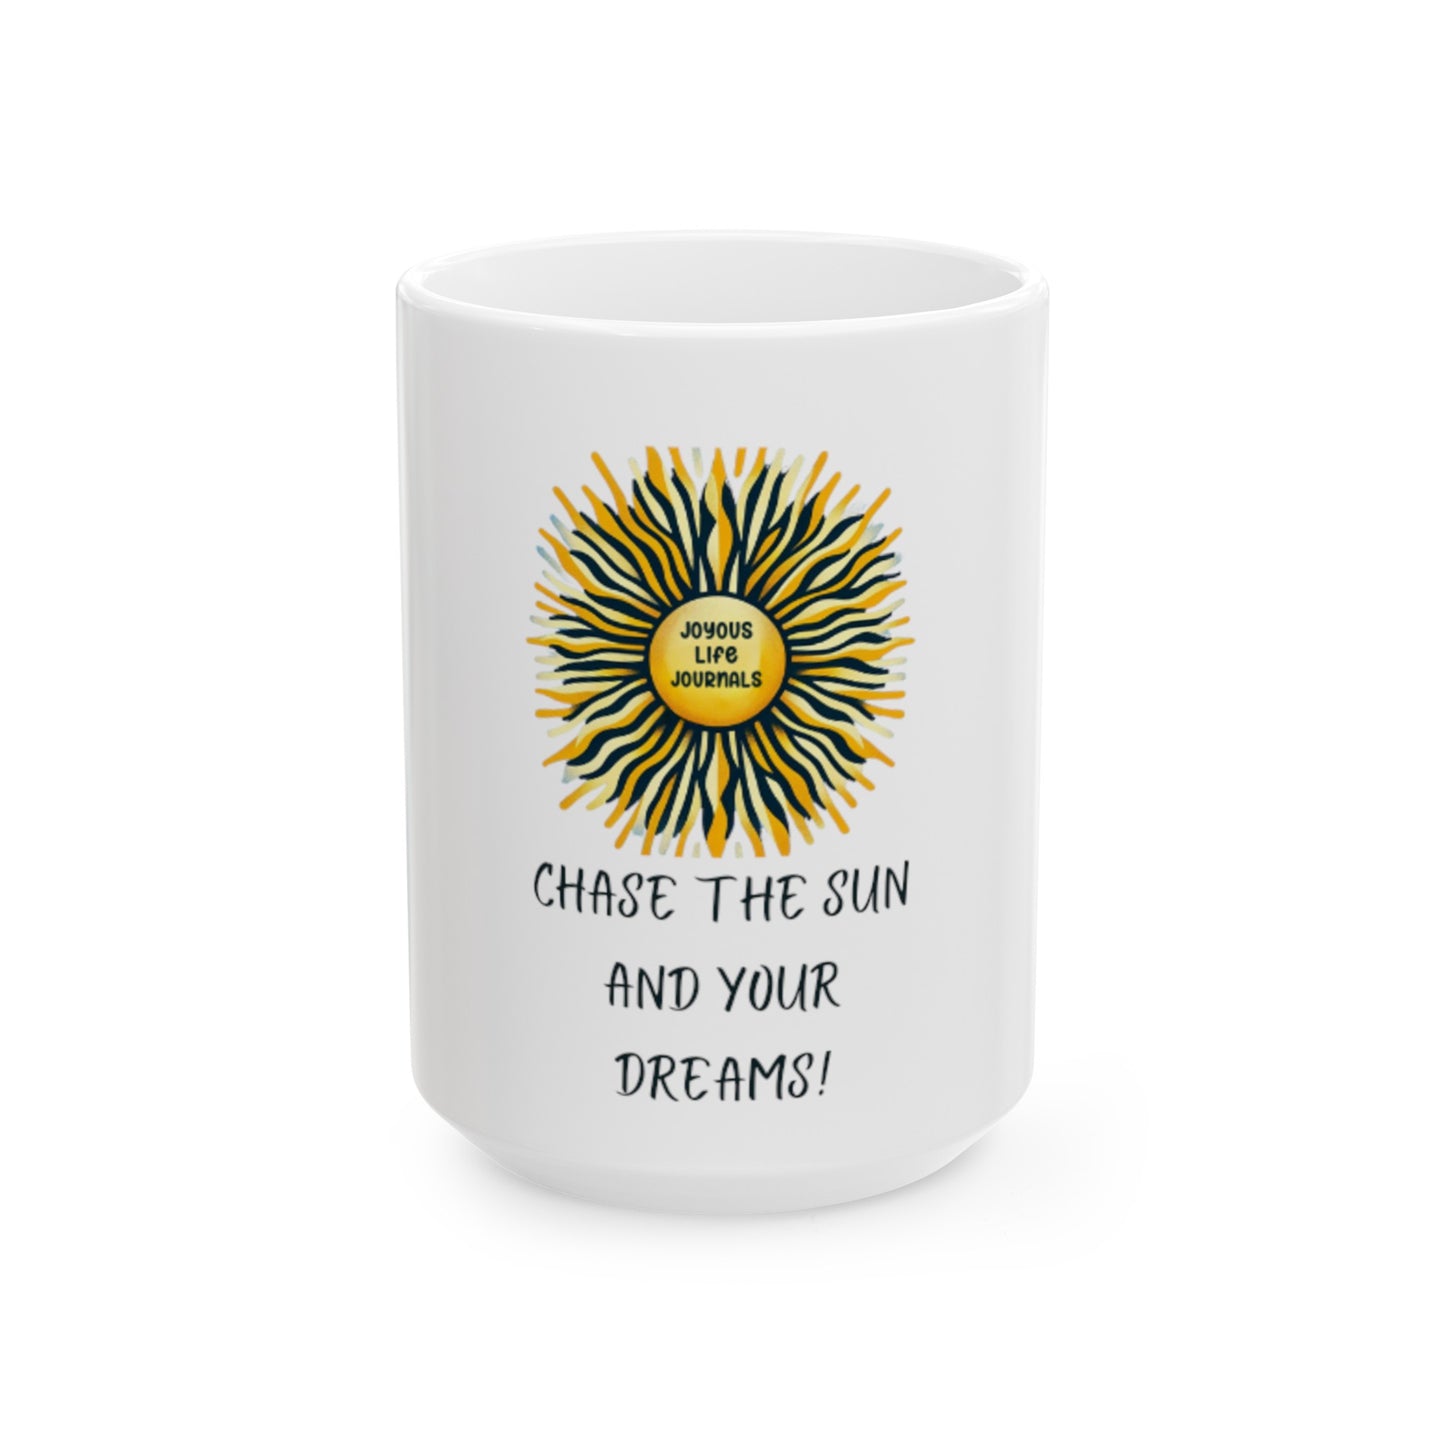 Chase the Sun Coffee Ceramic Mug, 15oz, Joyous Life Journals